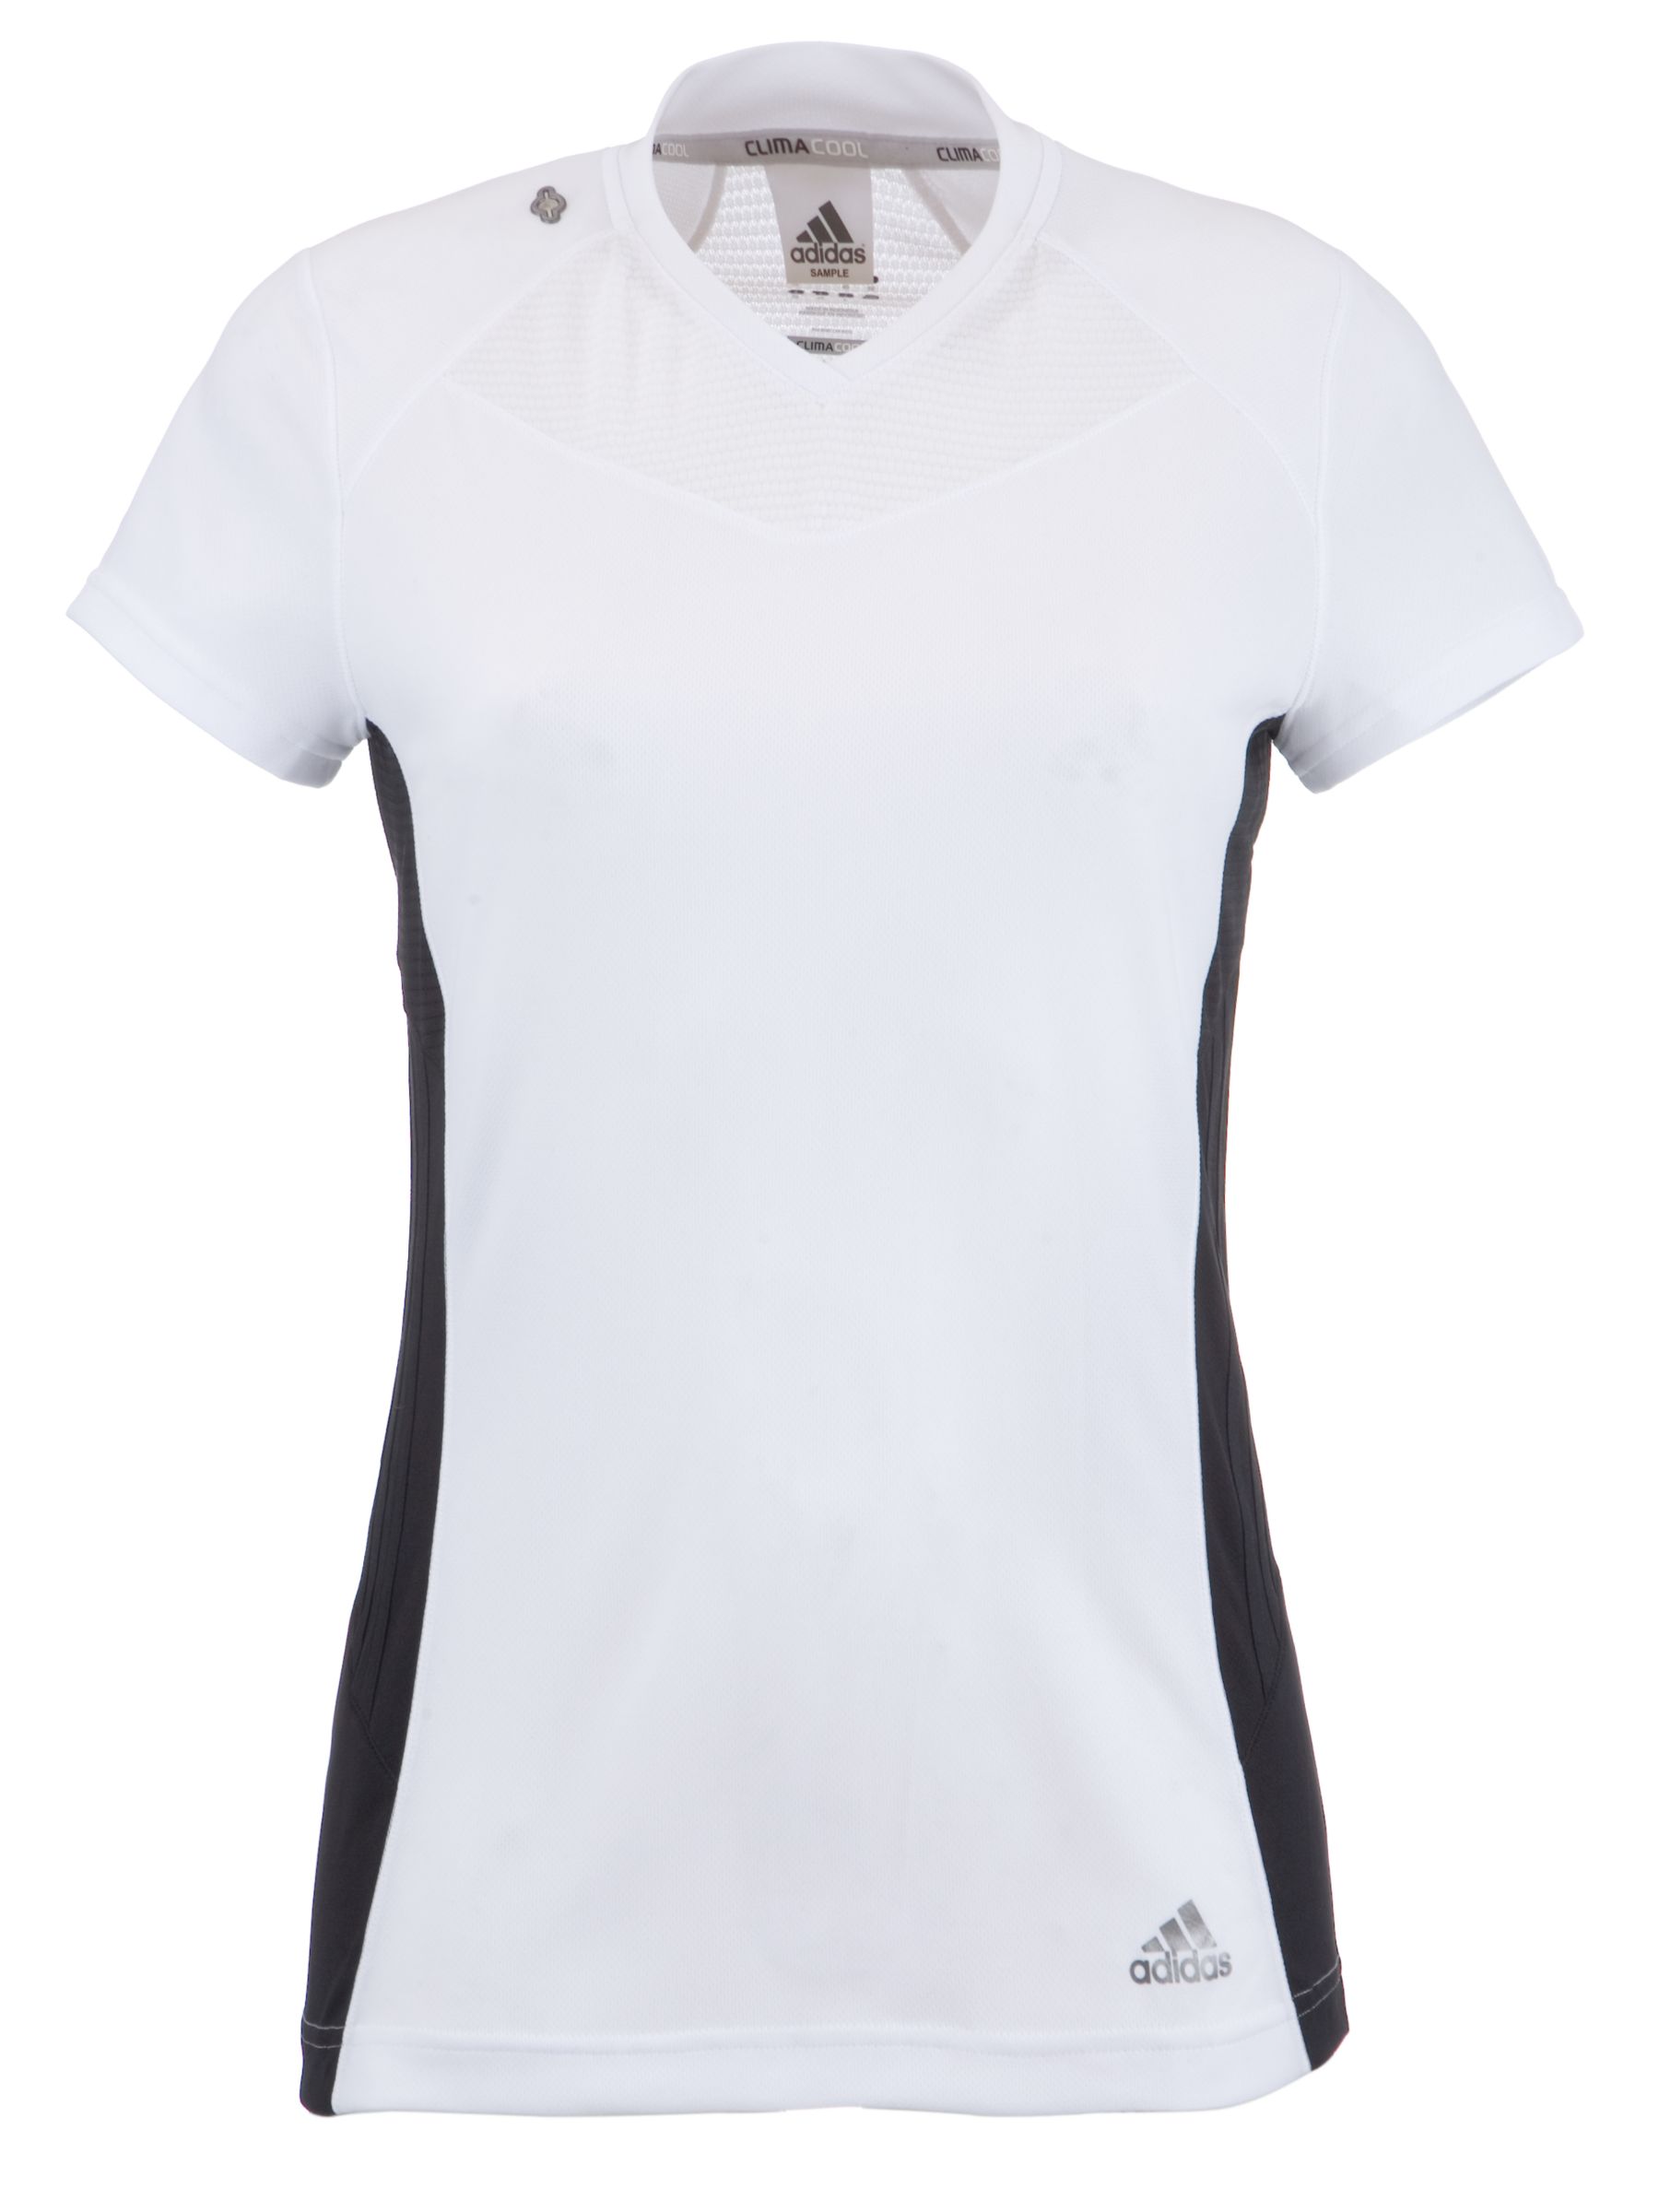 Supernova Short Sleeve T-Shirt, White/Black